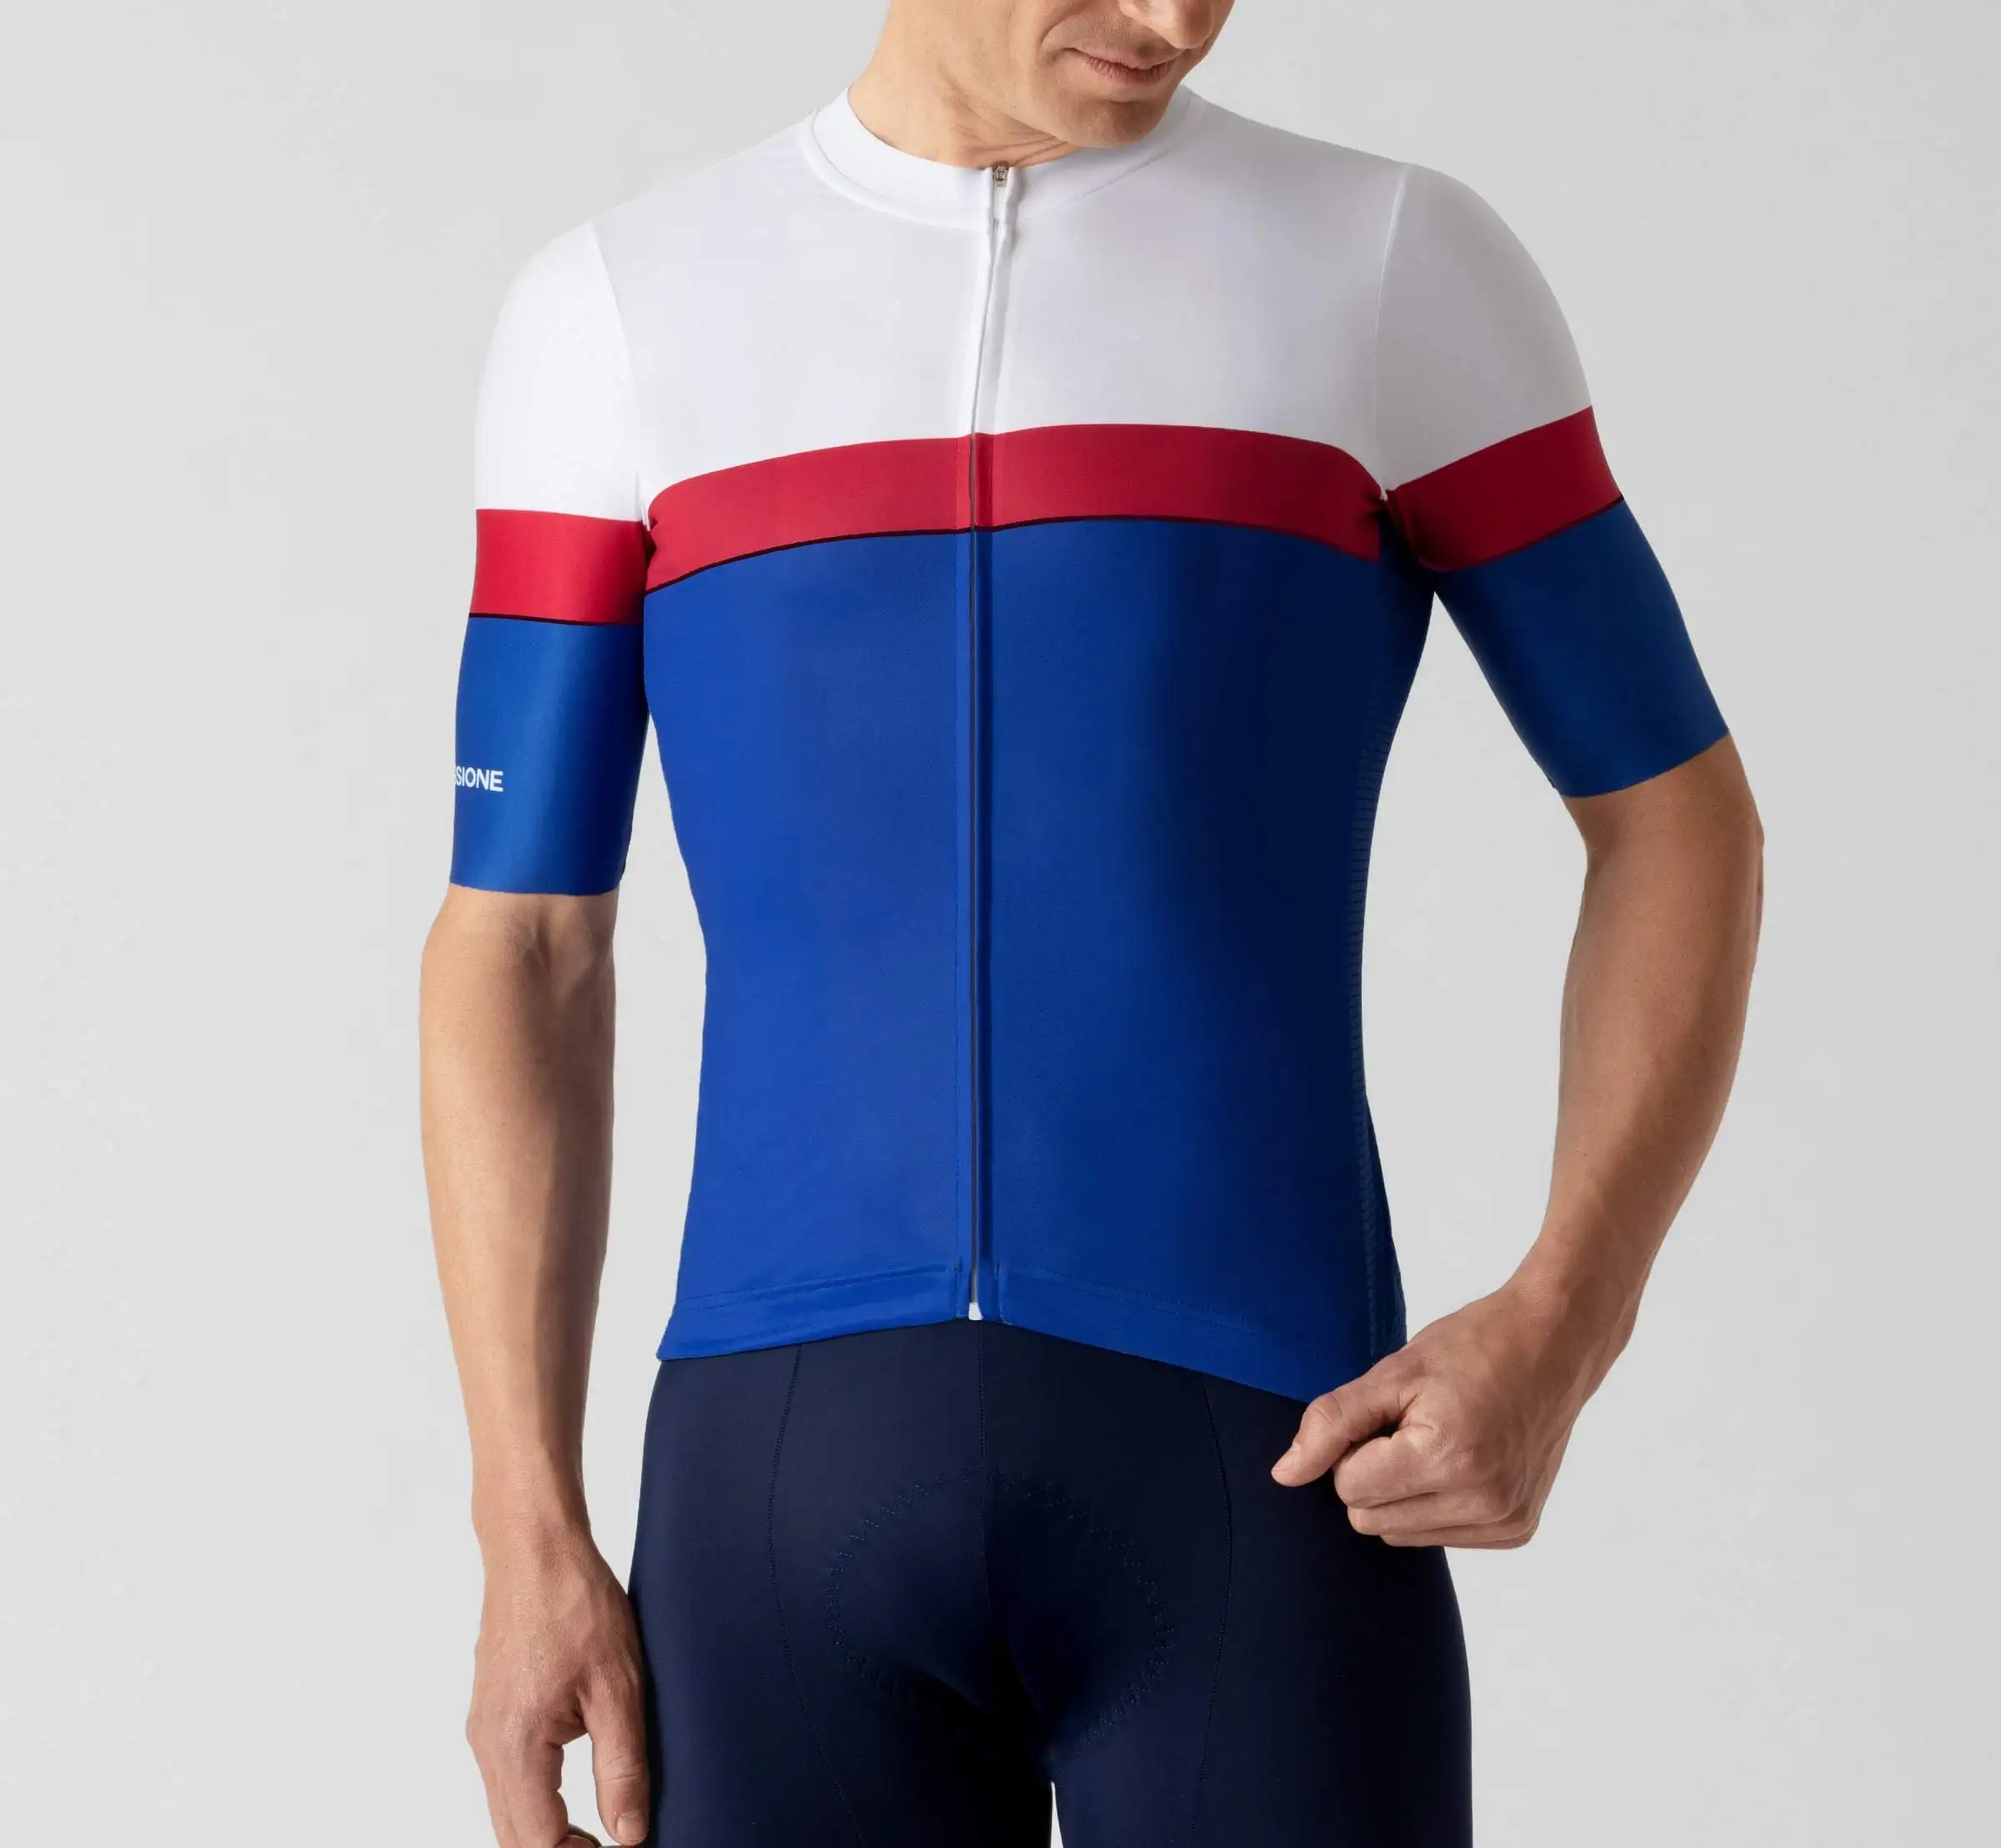 LIVERY JERSEY GT, Майки для велоспорта с коротким рукавом, одежда для велоспорта, летняя одежда для велоспорта, профессиональная гоночная одежда, облегающая одежда